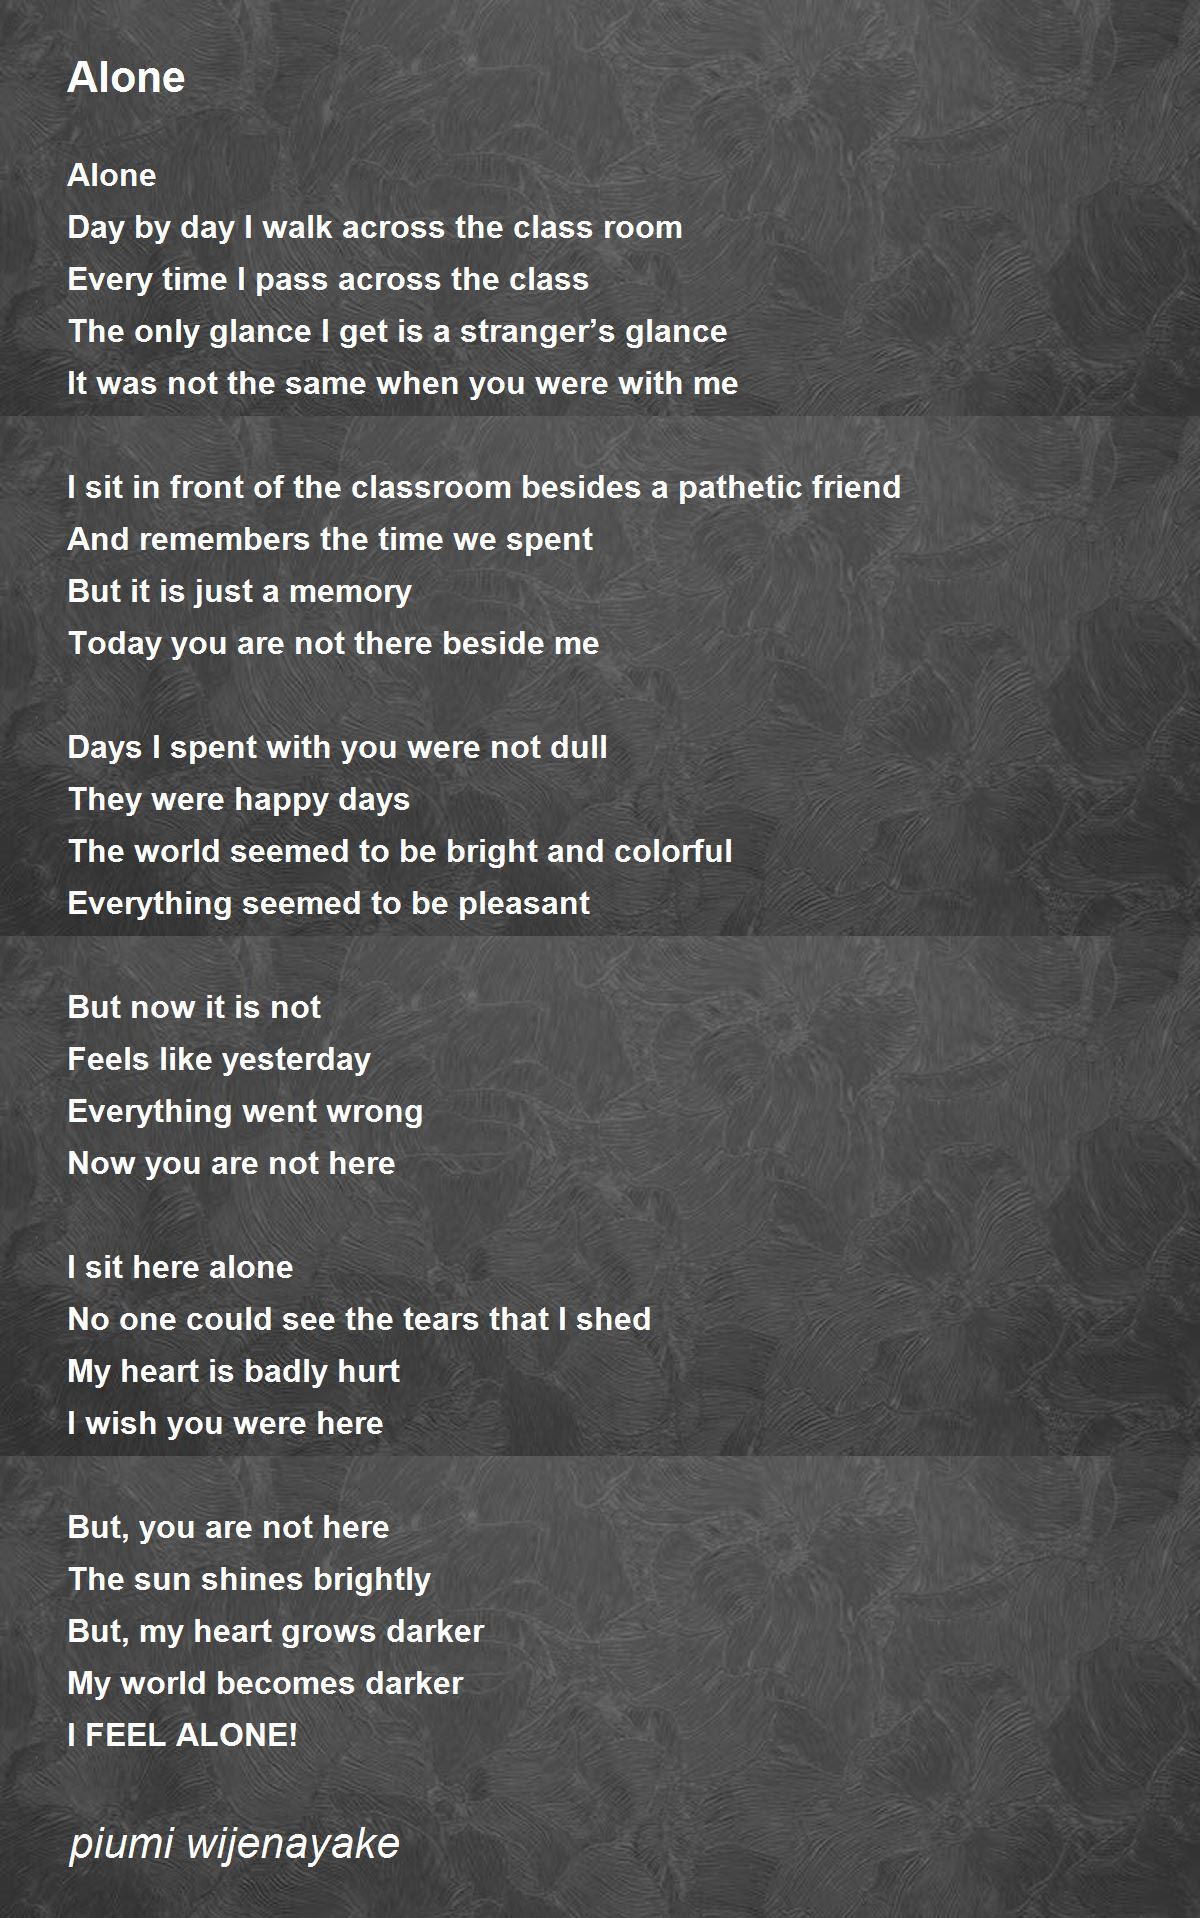 Alone - Alone Poem by piumi wijenayake